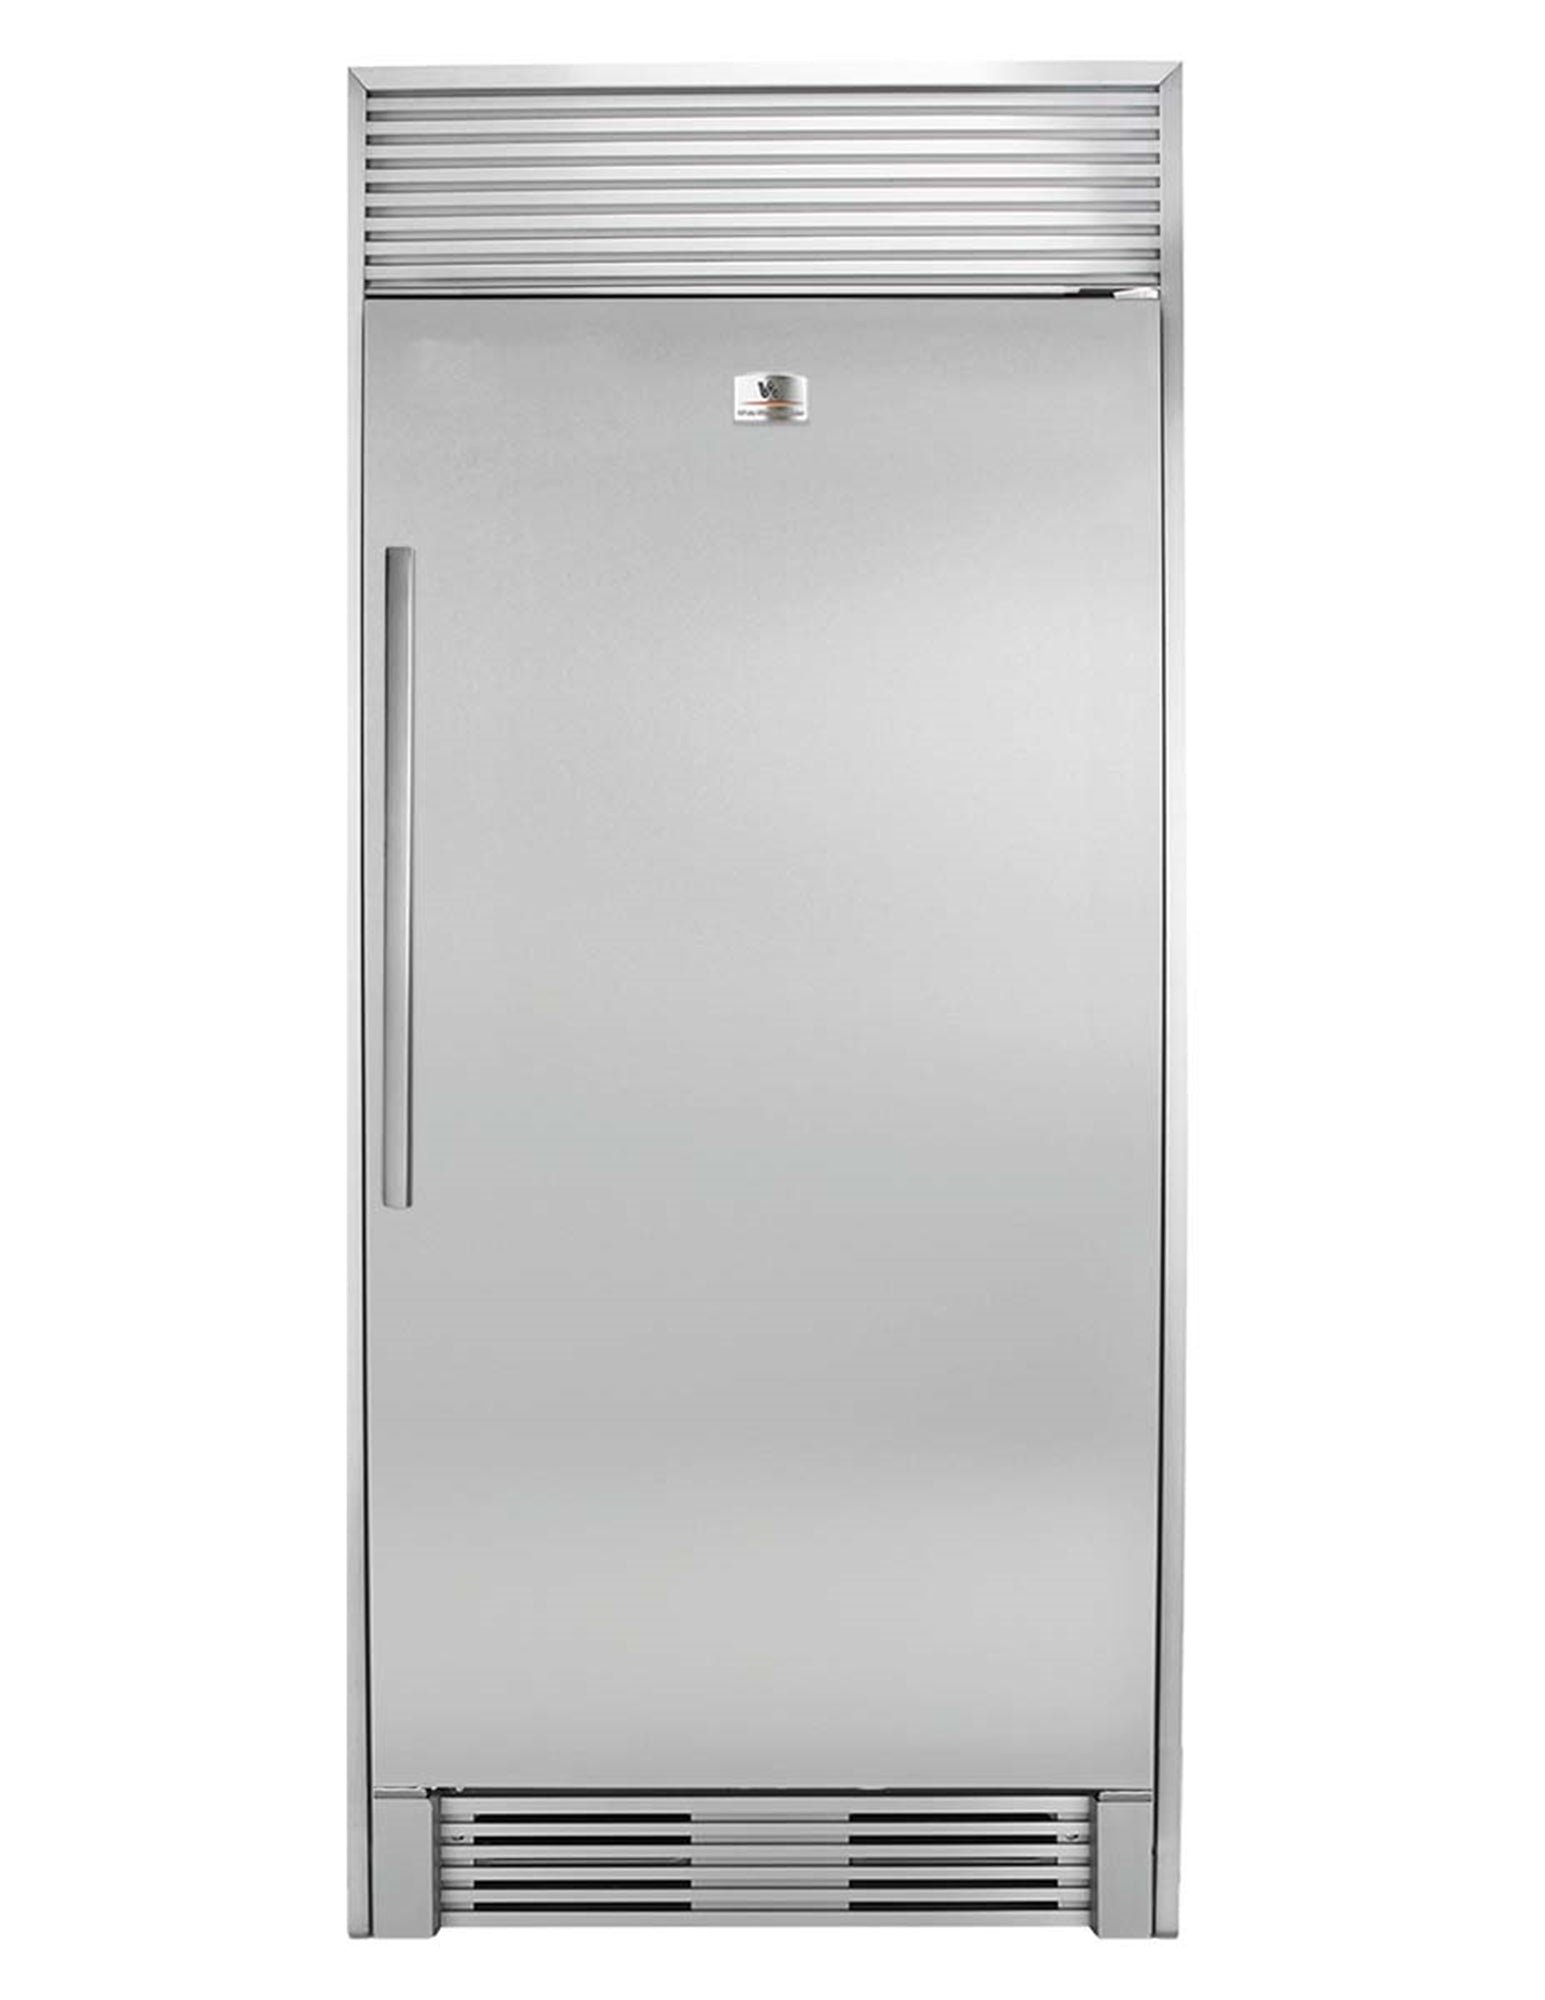 White Westinghouse Upright Refrigerator 524 Ltr - MRAD19V9QS